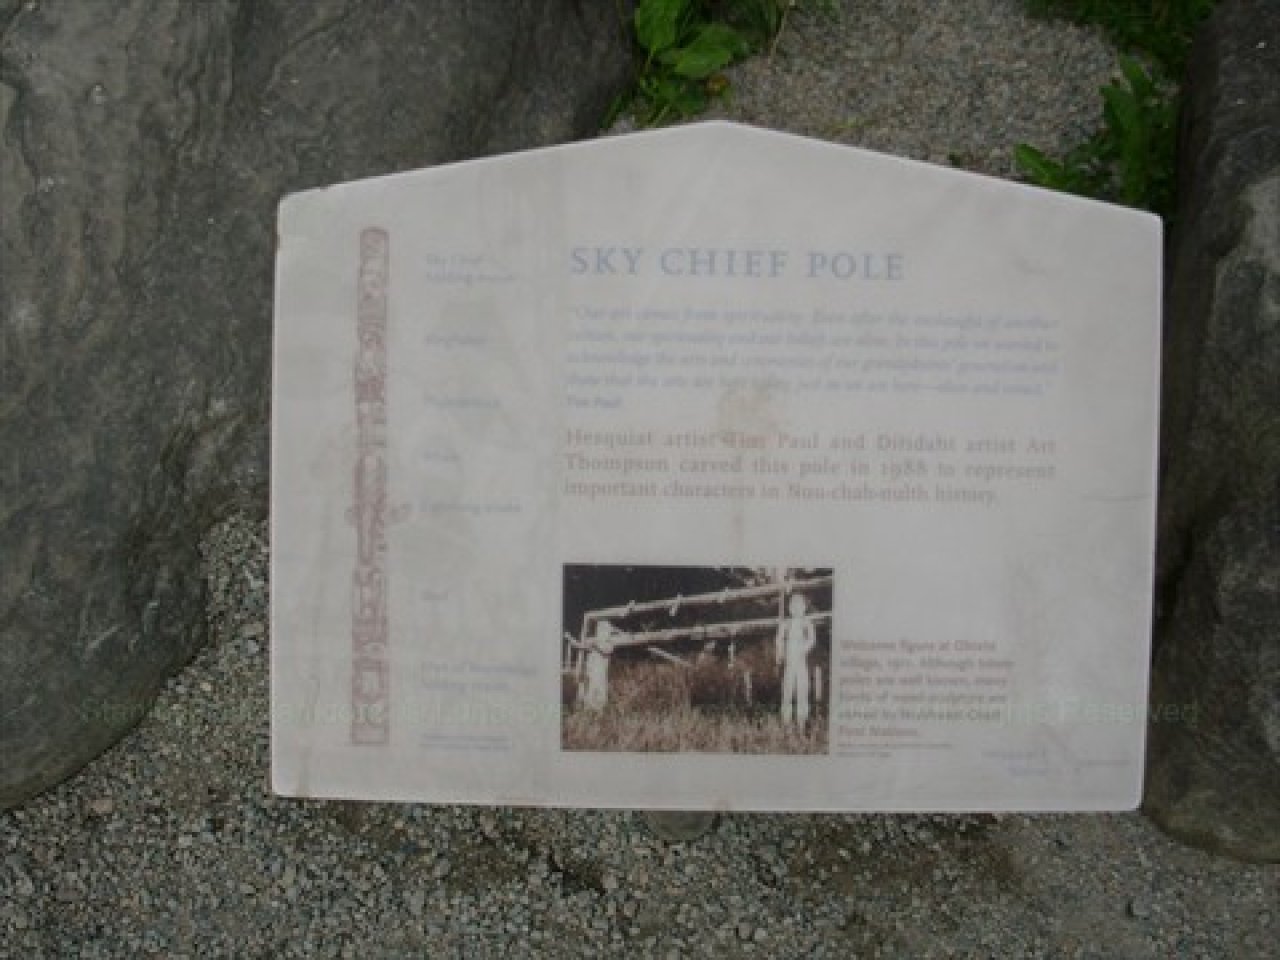 Sky Chief Totem Pole Plaque
Source: http://stanleyparkvan.com/stanley-park-van-attractions-totem-poles.html